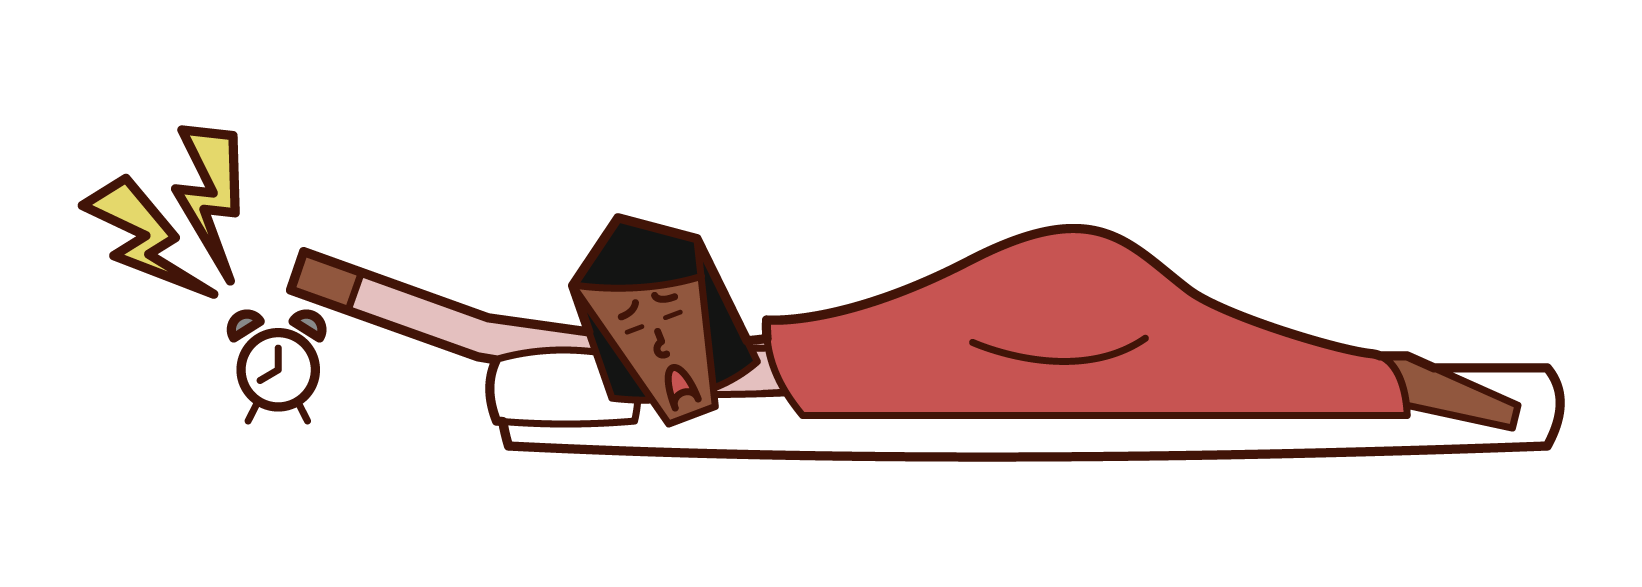 Illustration of a woman who stops alarm clock alarm